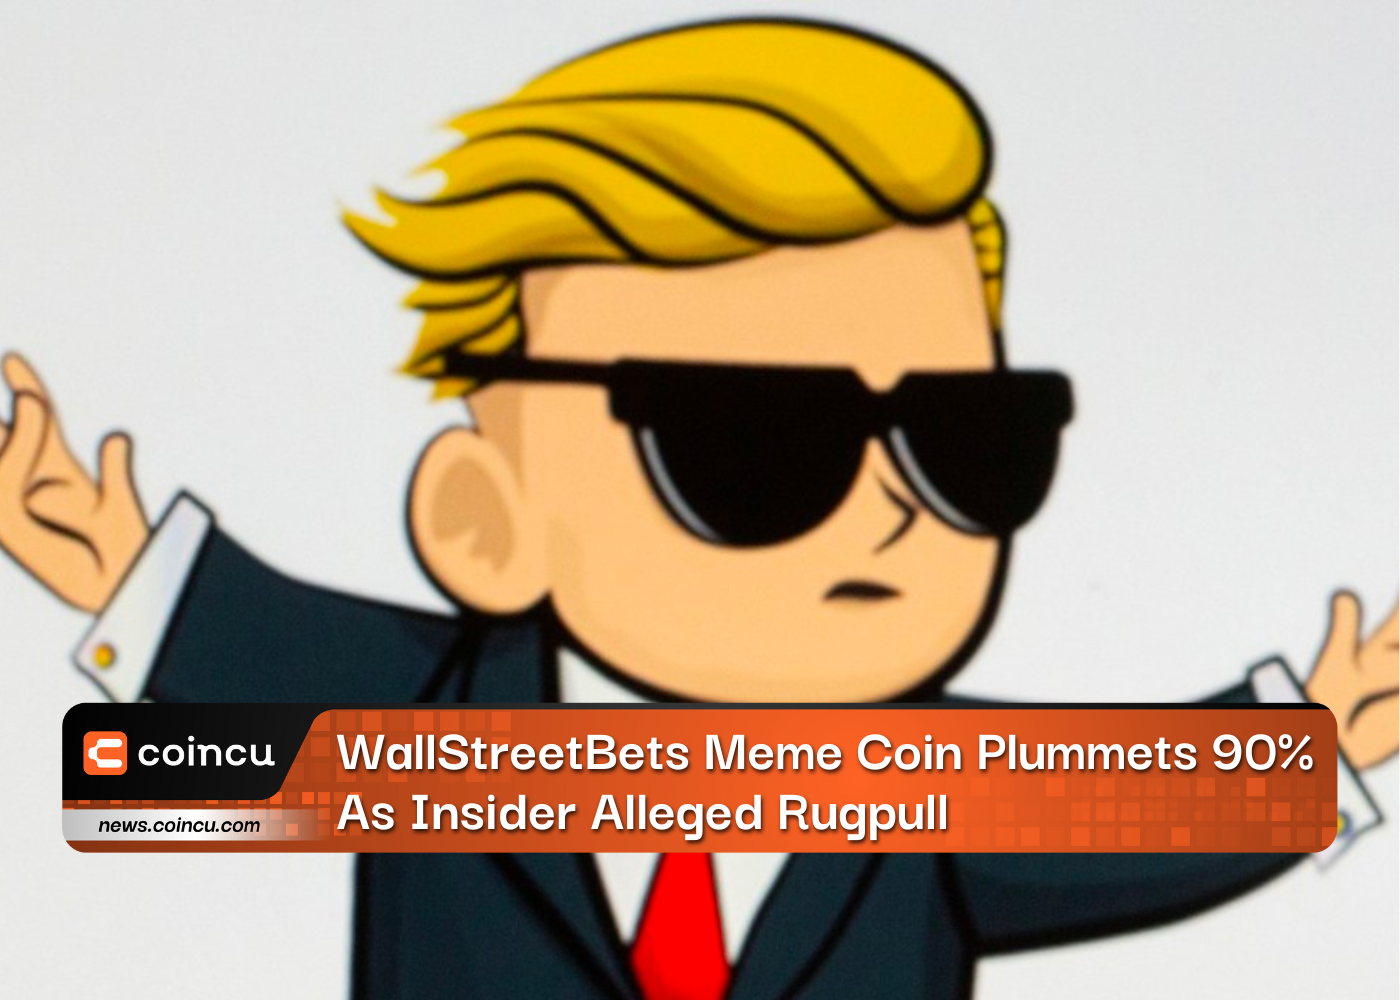 WallStreetBets Meme Coin Plummets 90% As Insider Alleged Rugpull